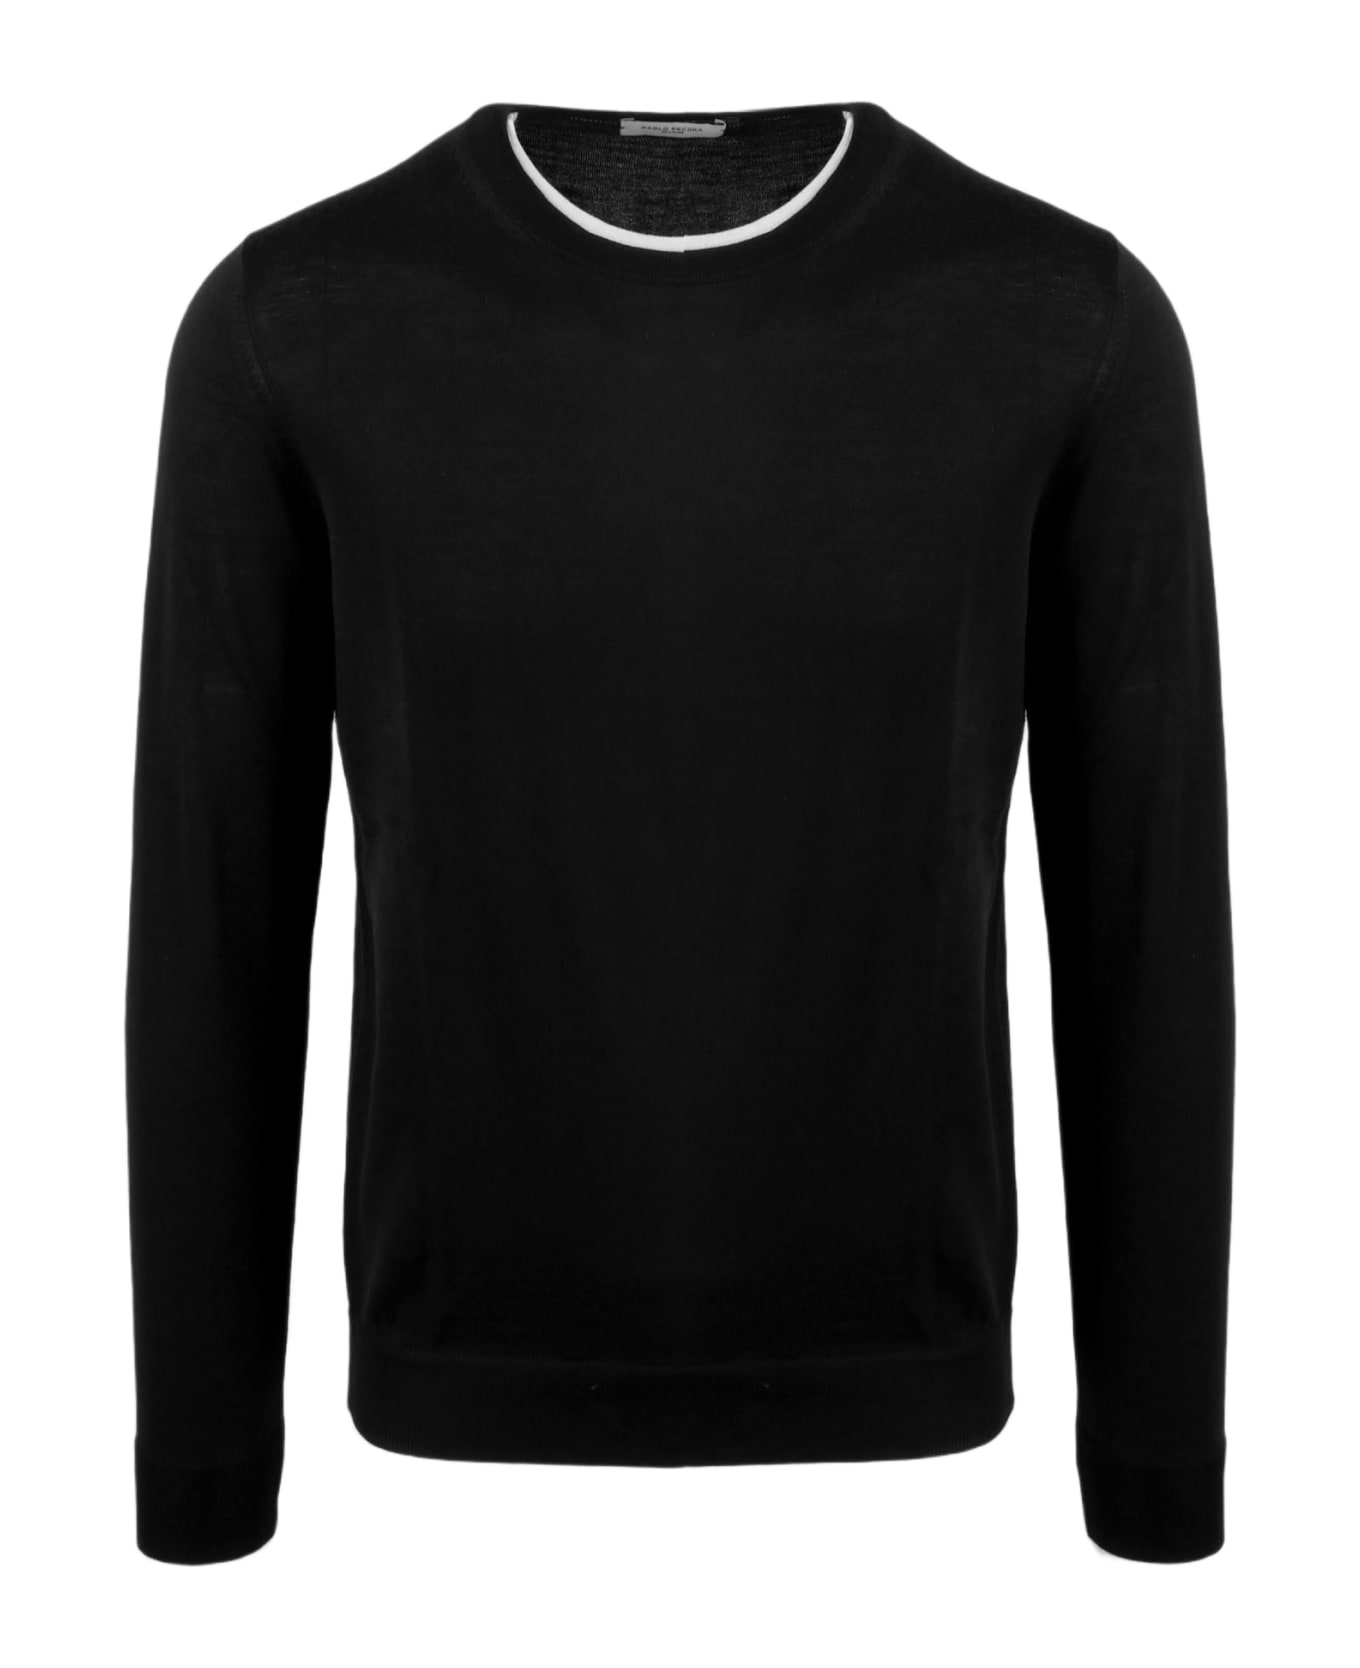 Paolo Pecora Merino Wool Sweater - Black